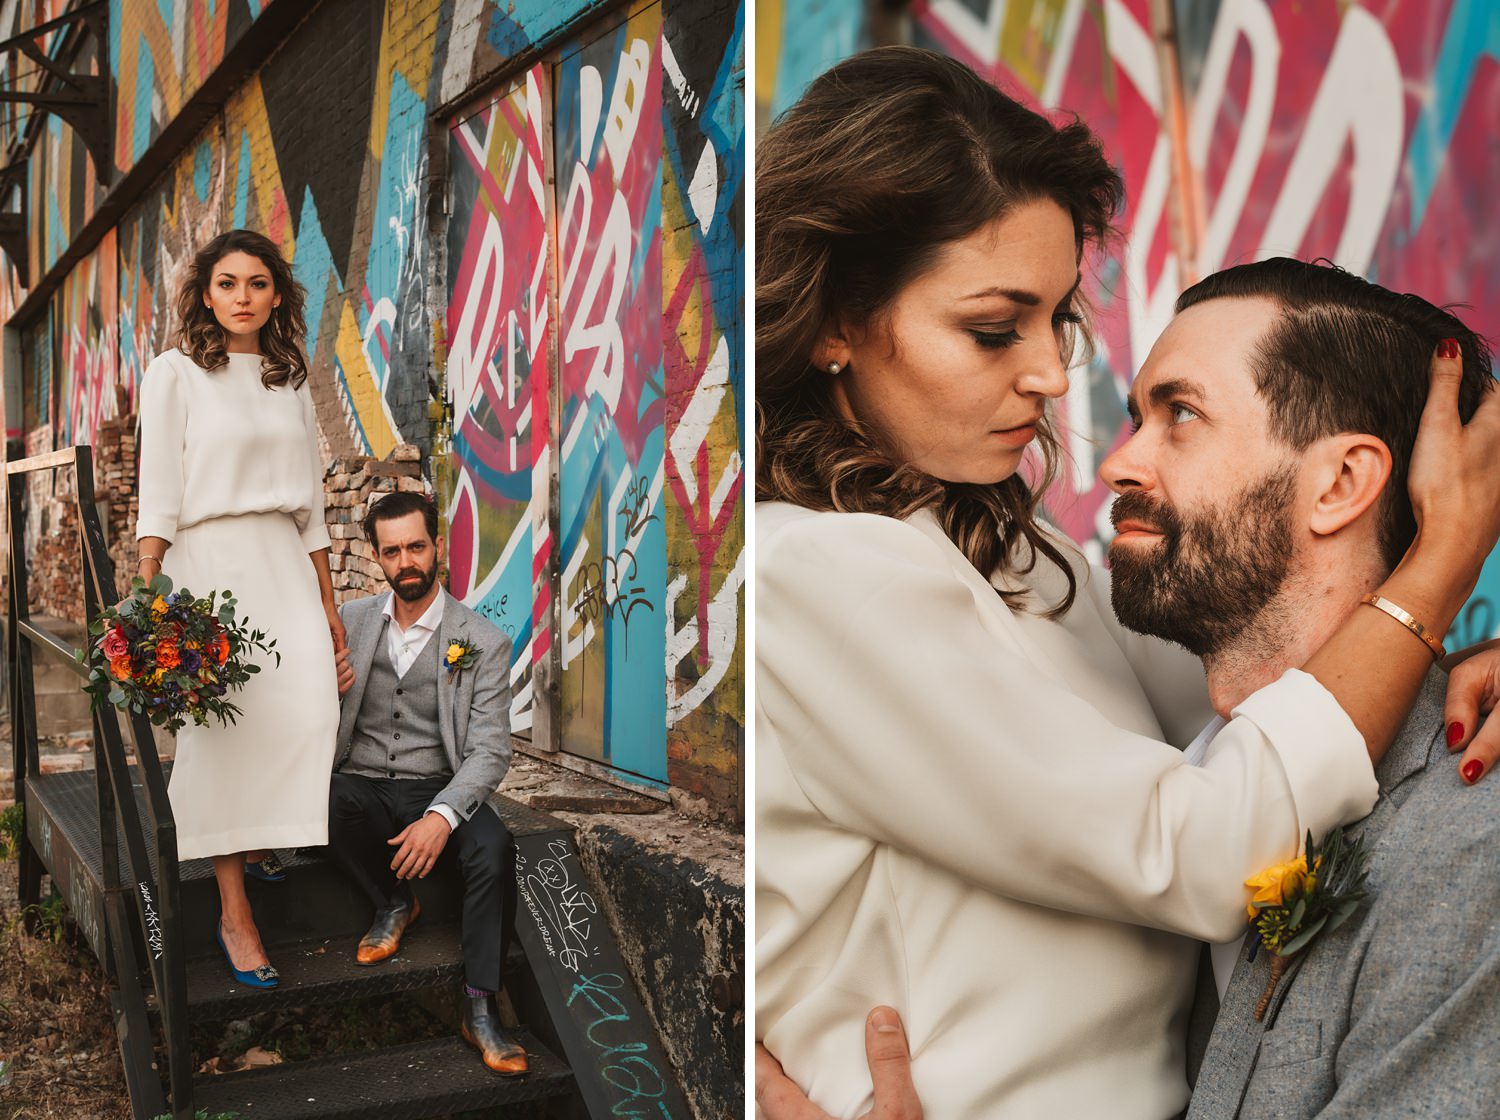 Sunrise Chicago Wedding - The Adamkovi, bride and groom creative portraits, Fulton Market, graffiti, industrial,